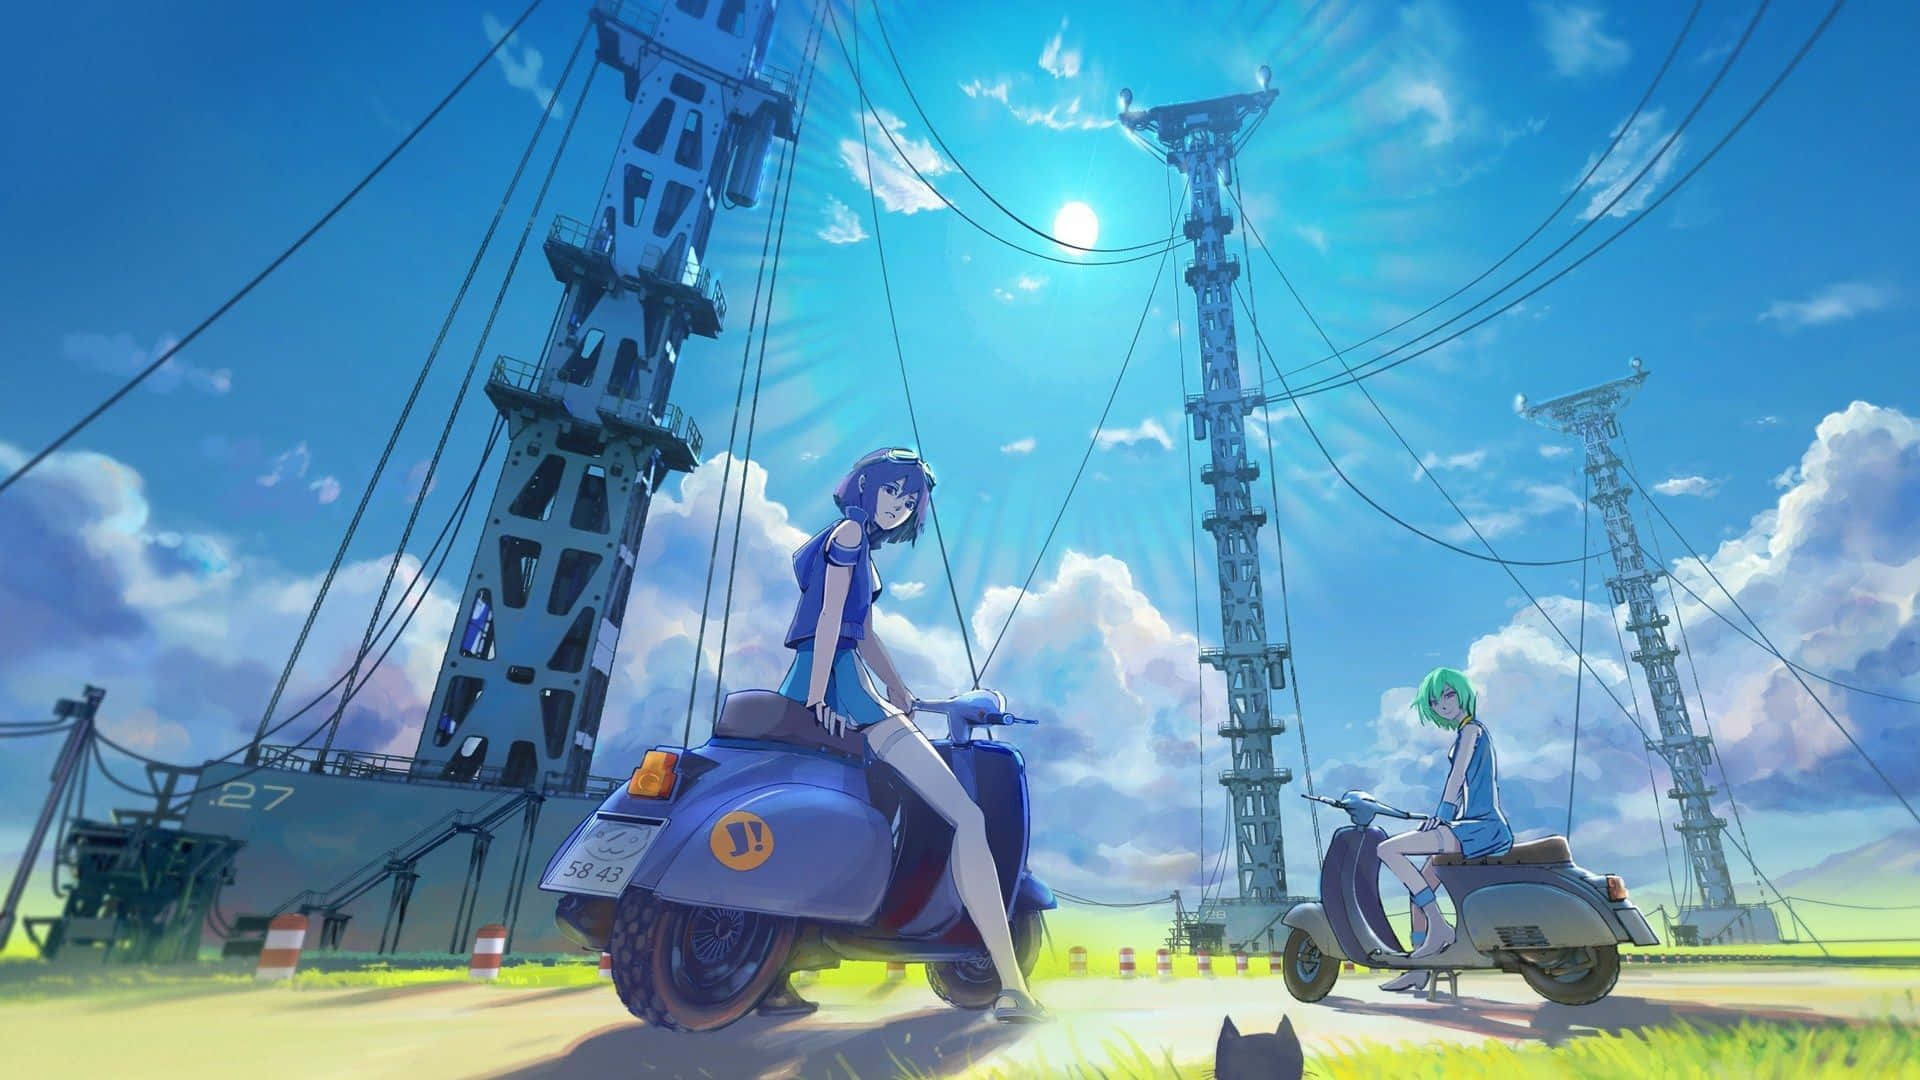 Unosfondo Per Desktop Con Un Vibrante Estetica Anime Blu. Sfondo